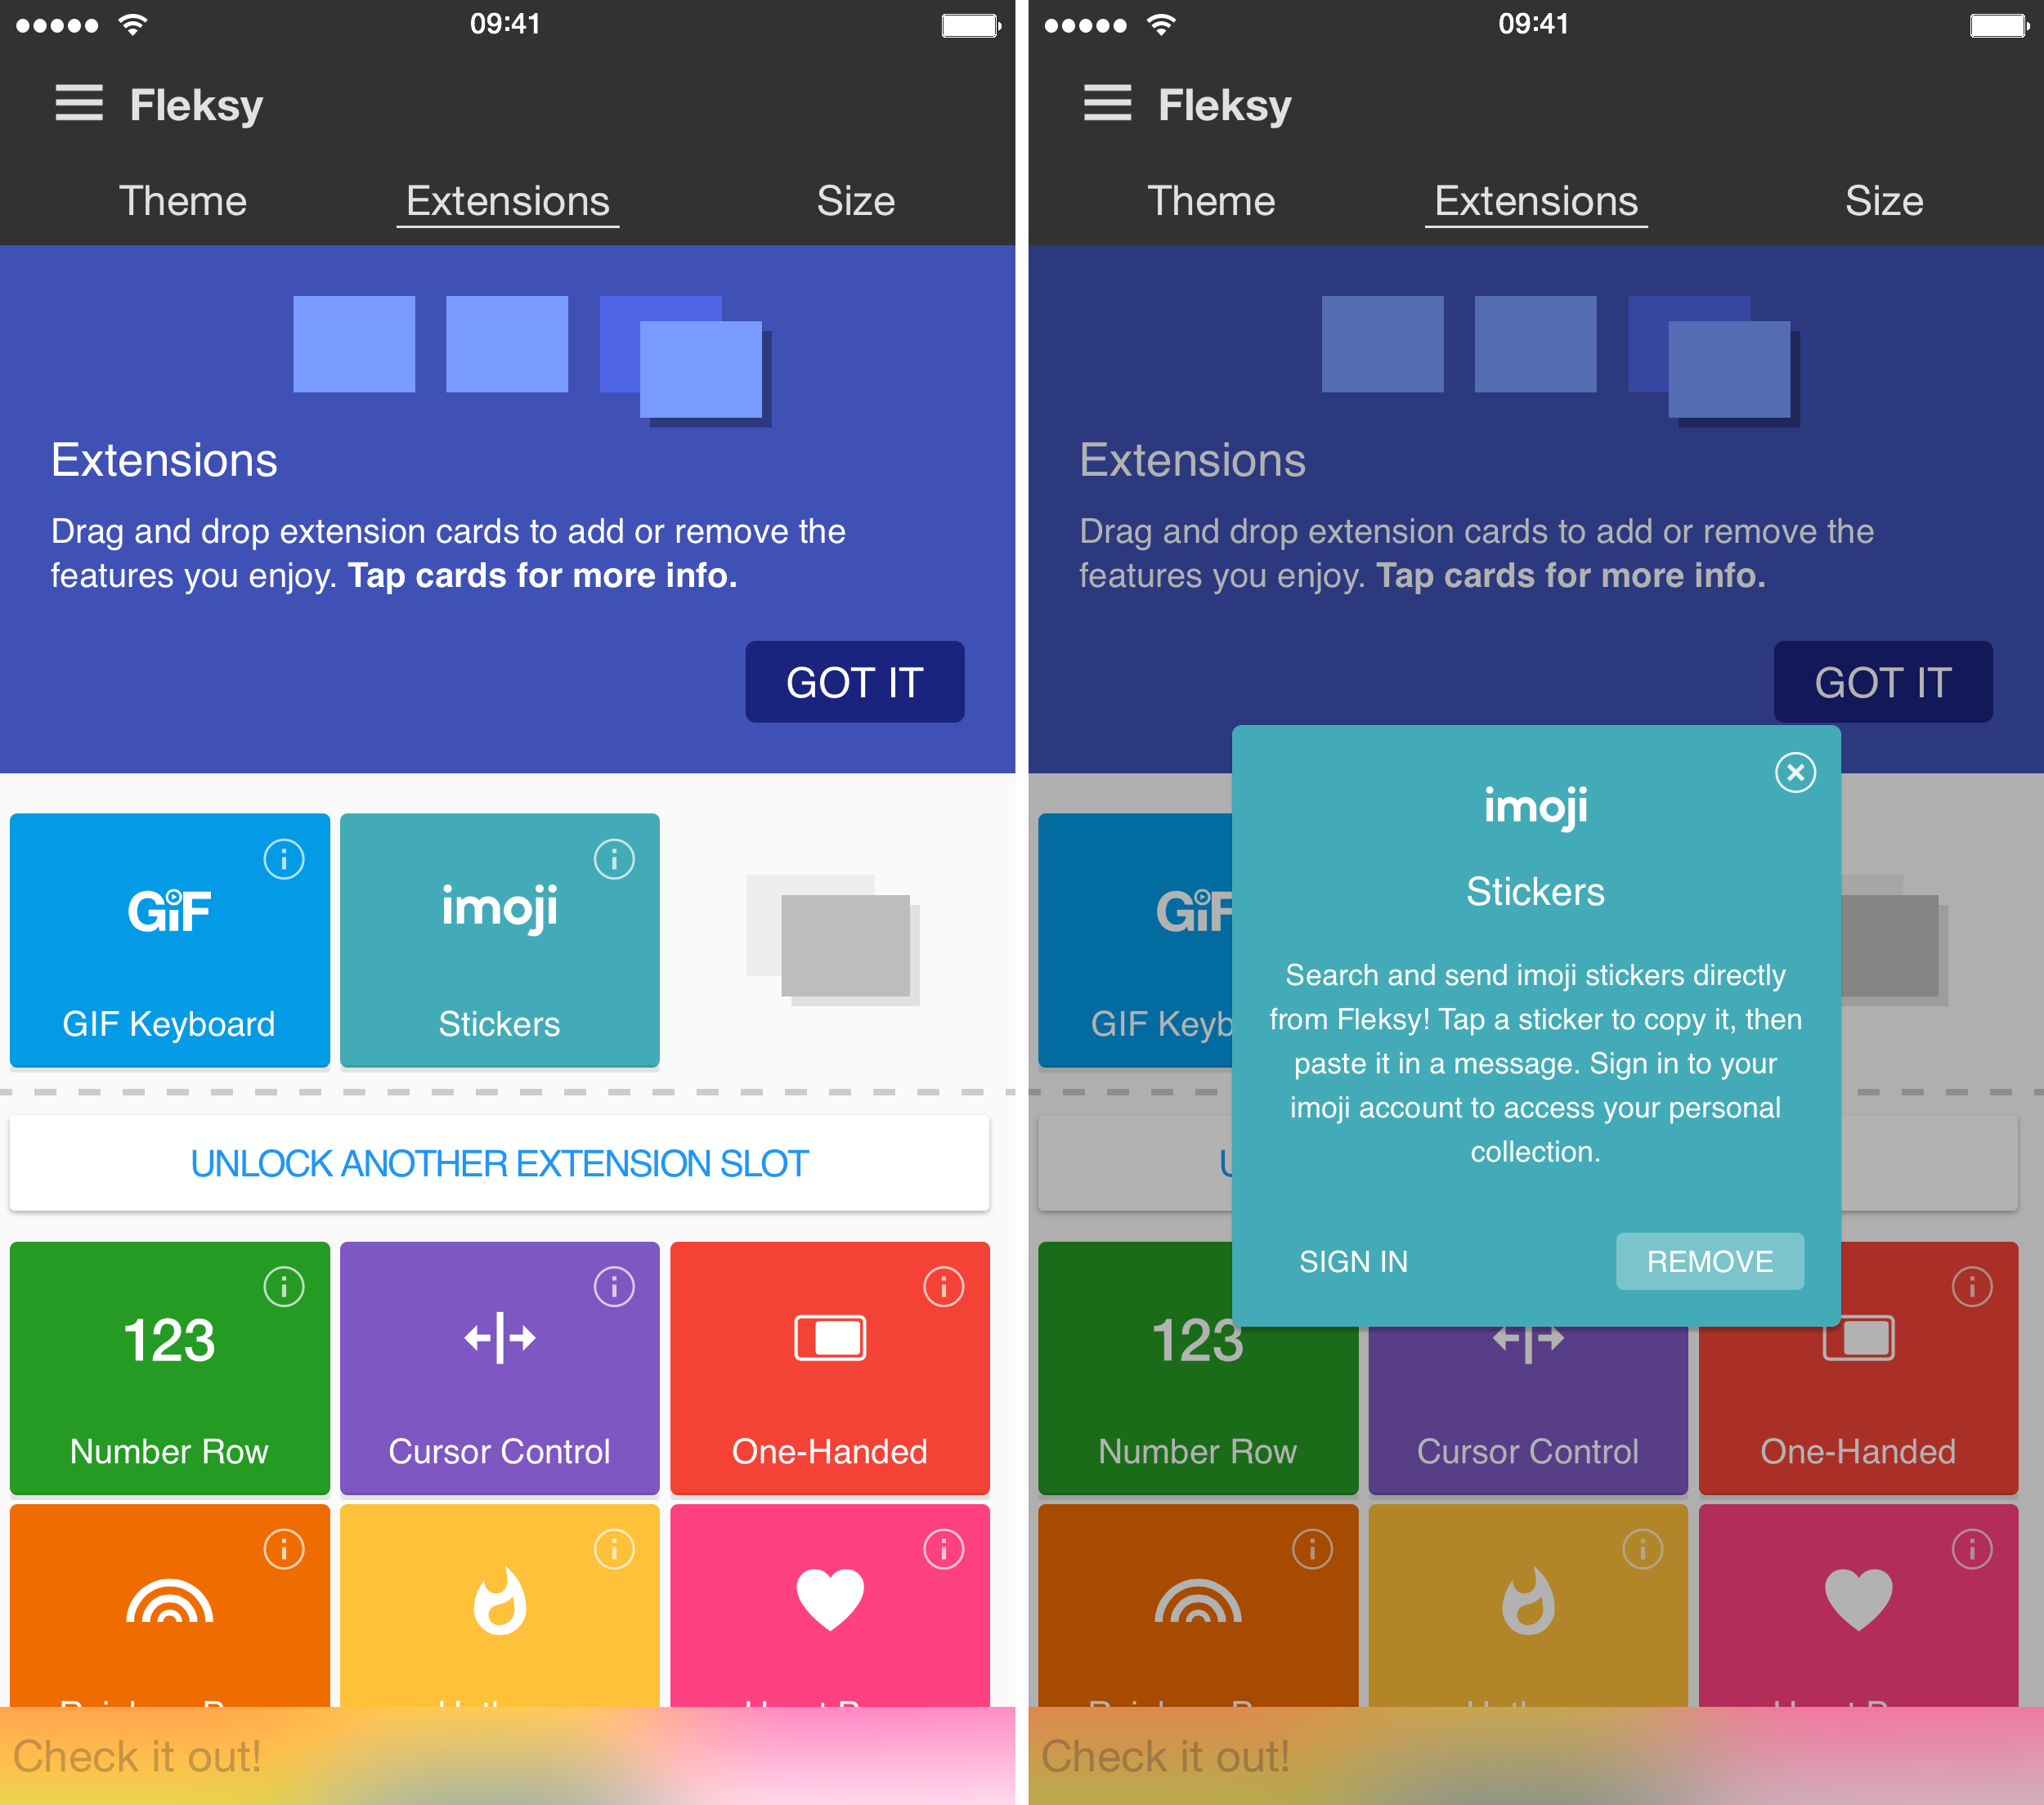 Fleksy Keyboard 5.7 for iOS Stickers iPhone screenshot 002